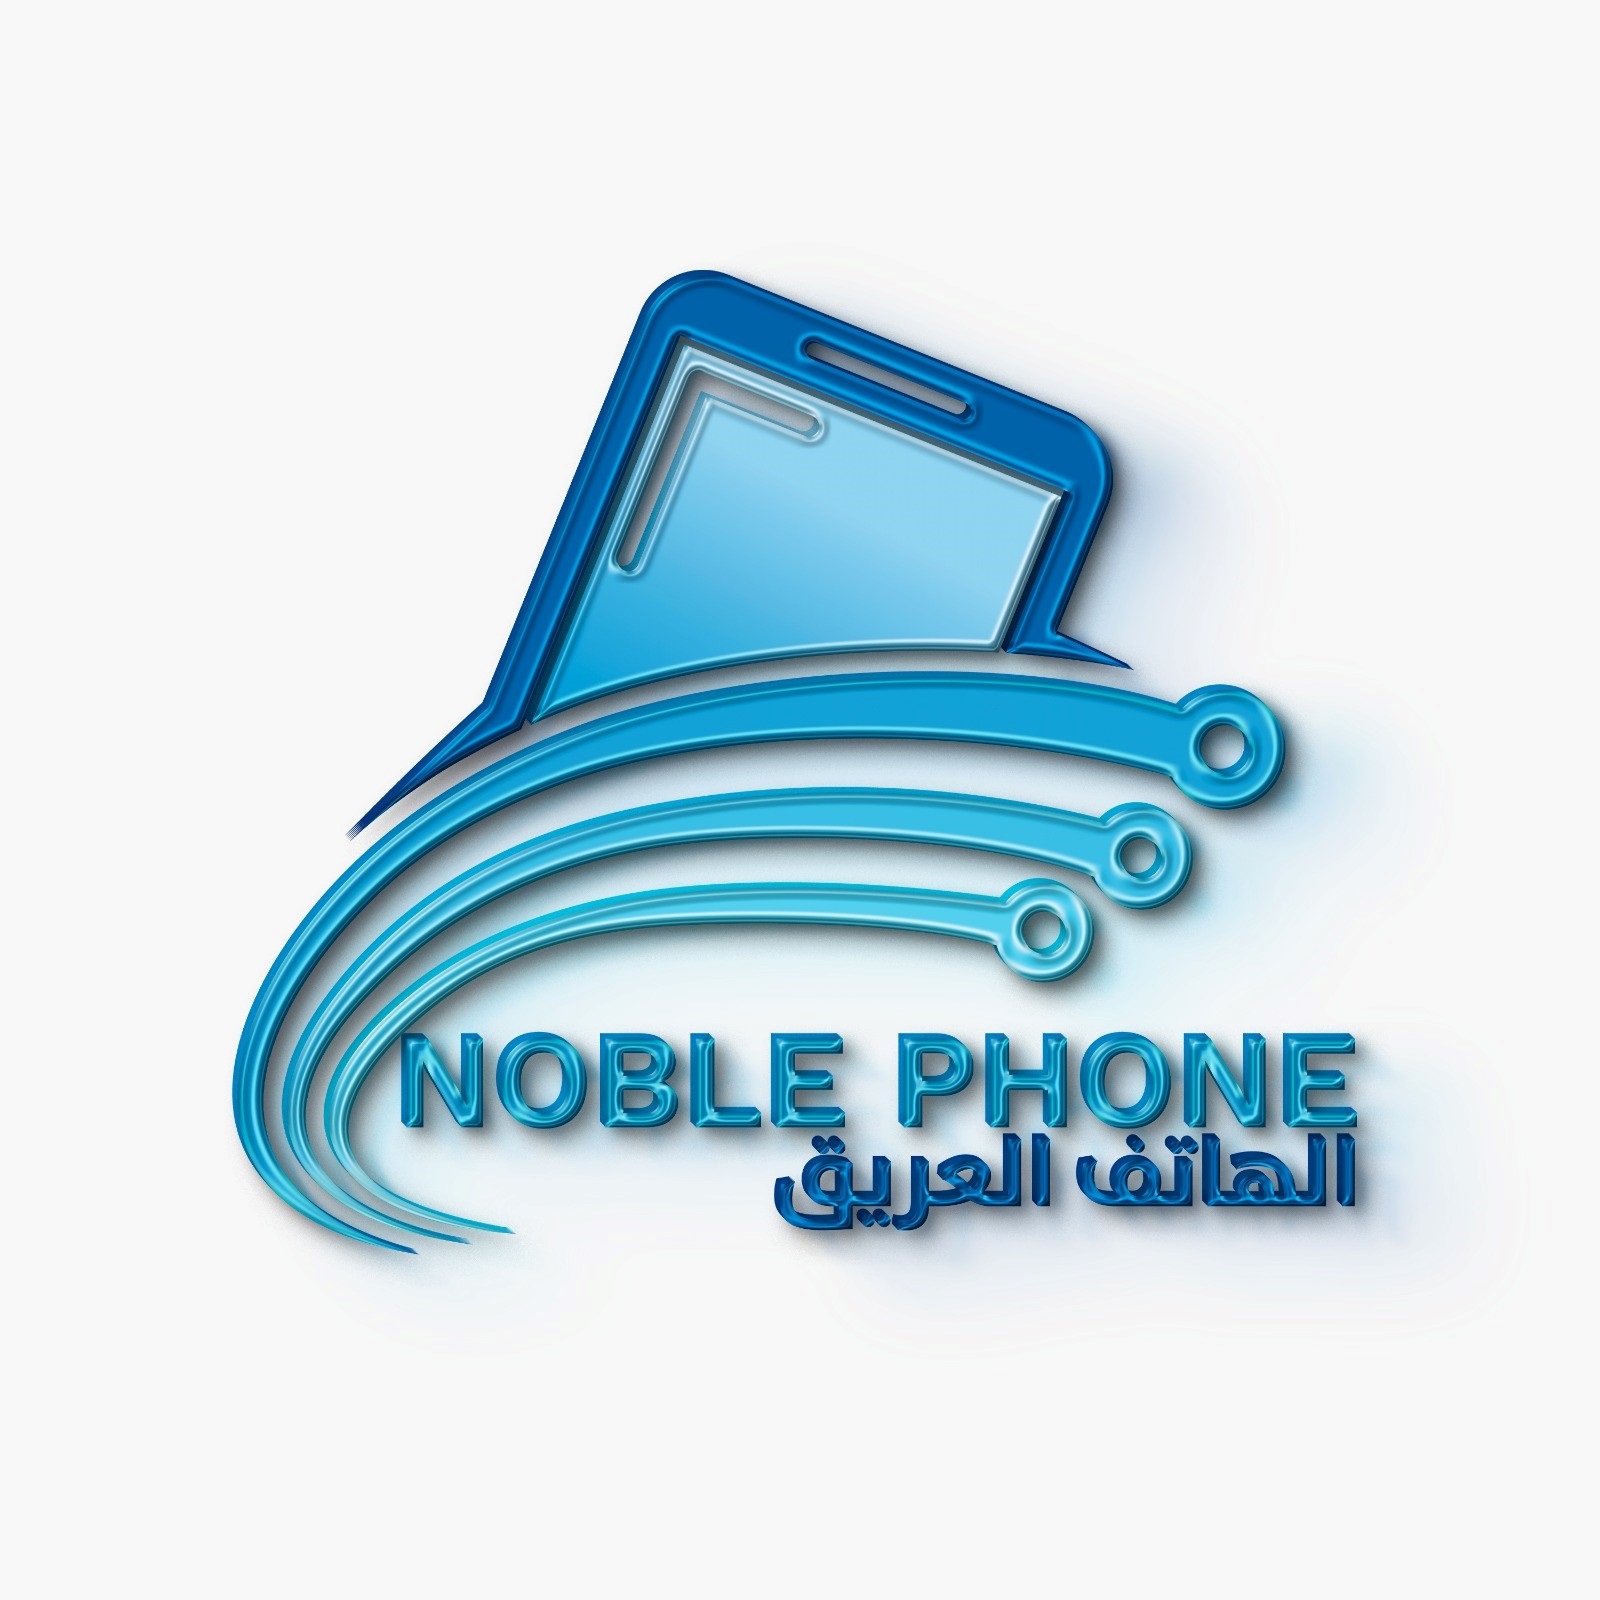 noble phone